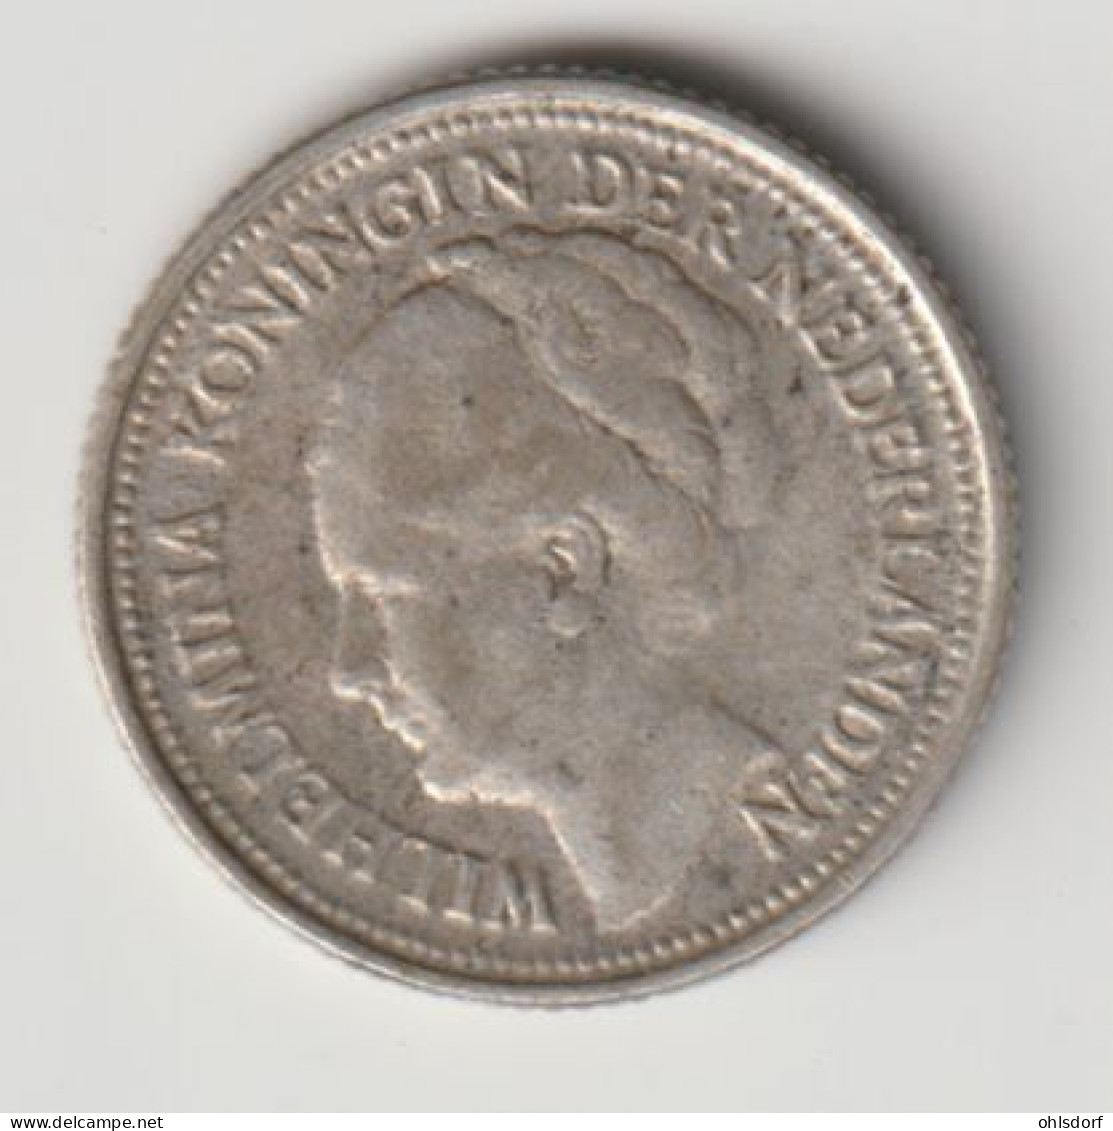 NEDERLAND 1936: 10 Cents, Silver, KM 164 - 10 Centavos